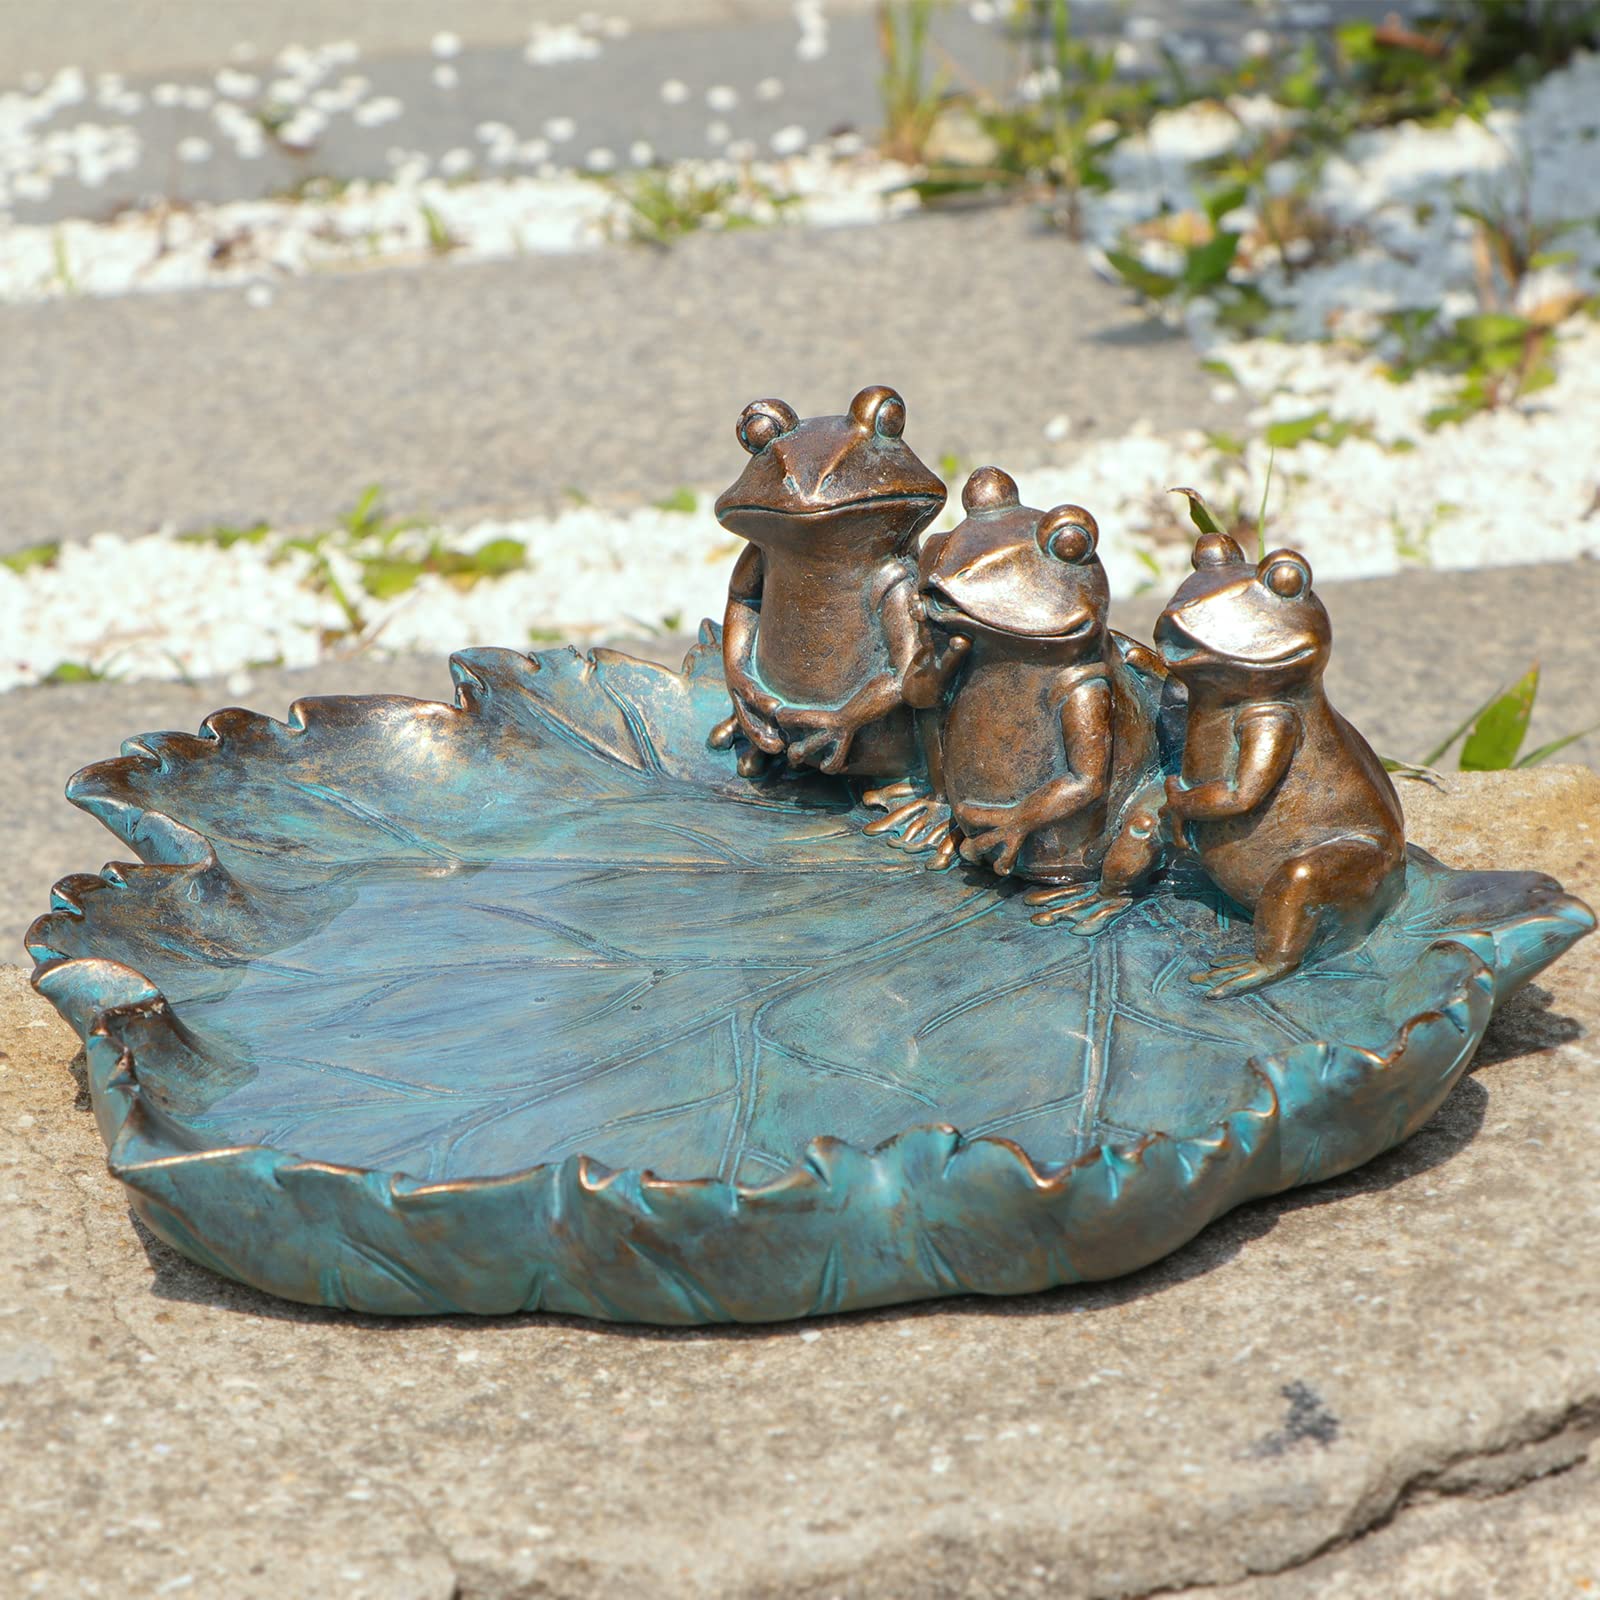 MUMTOP Bird Baths for Outdoors, Antique Outdoor Garden Bird Bath Resin Birdbath Bowl with Vintage Frogs Ornament for Outside Yar